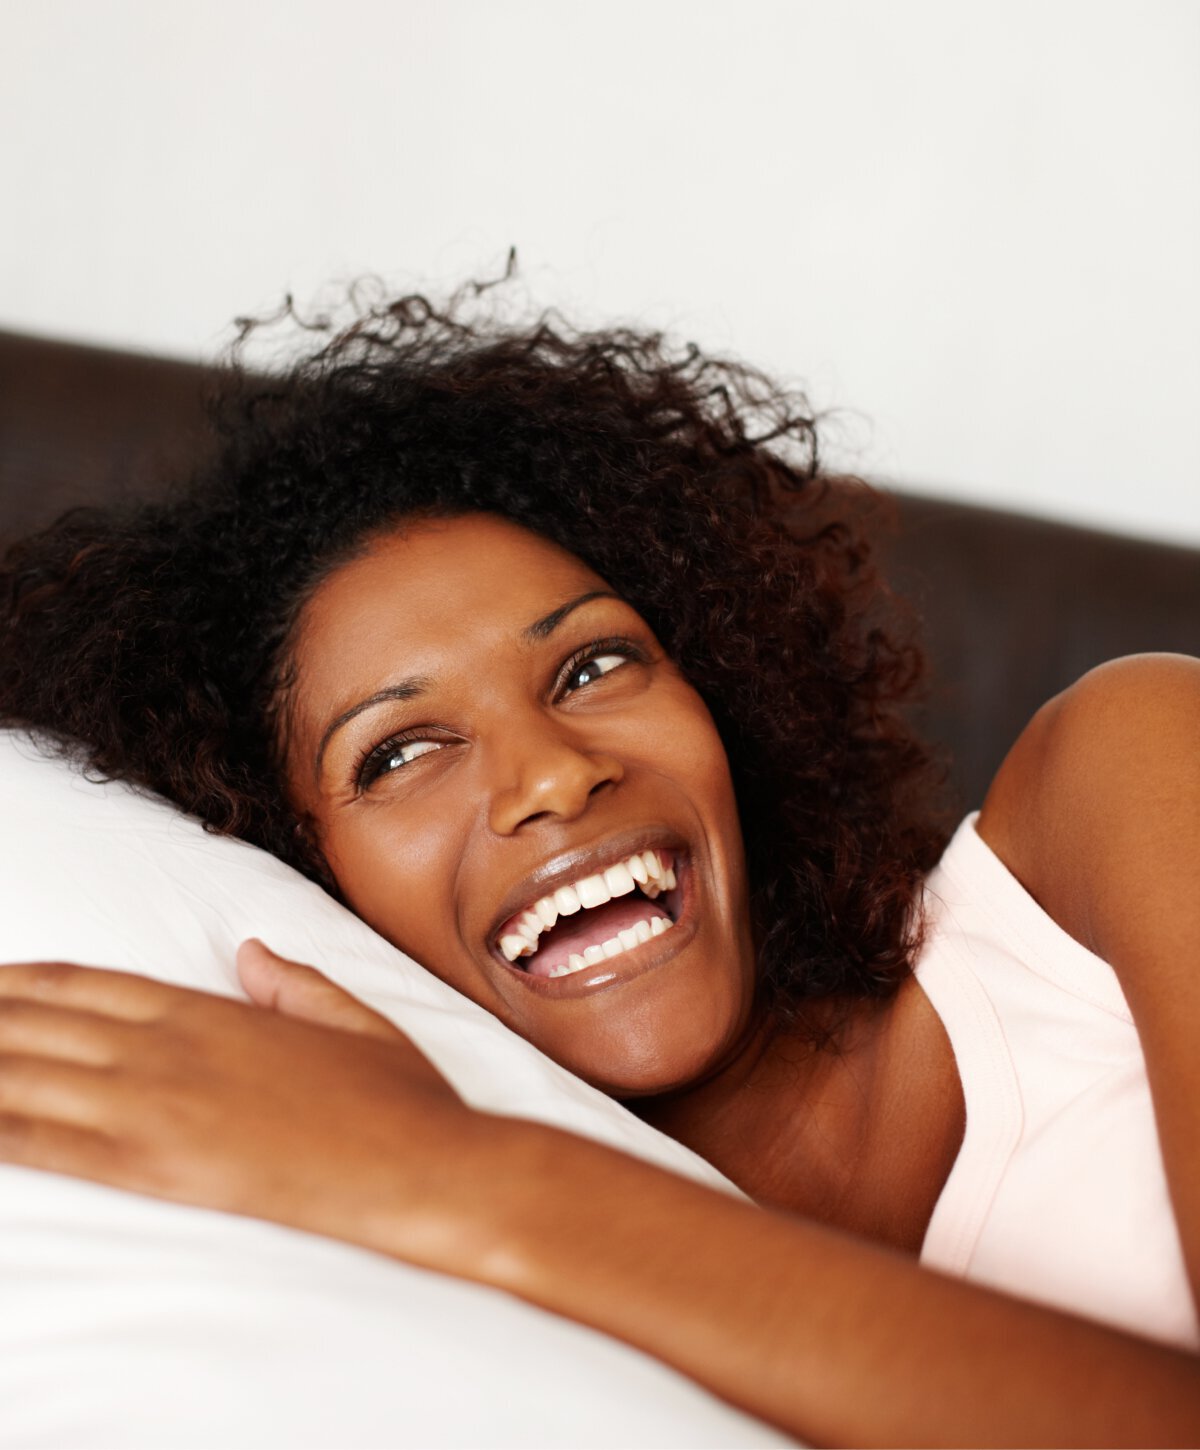 Sherman Oaks TMJ treatment model smiling in bed